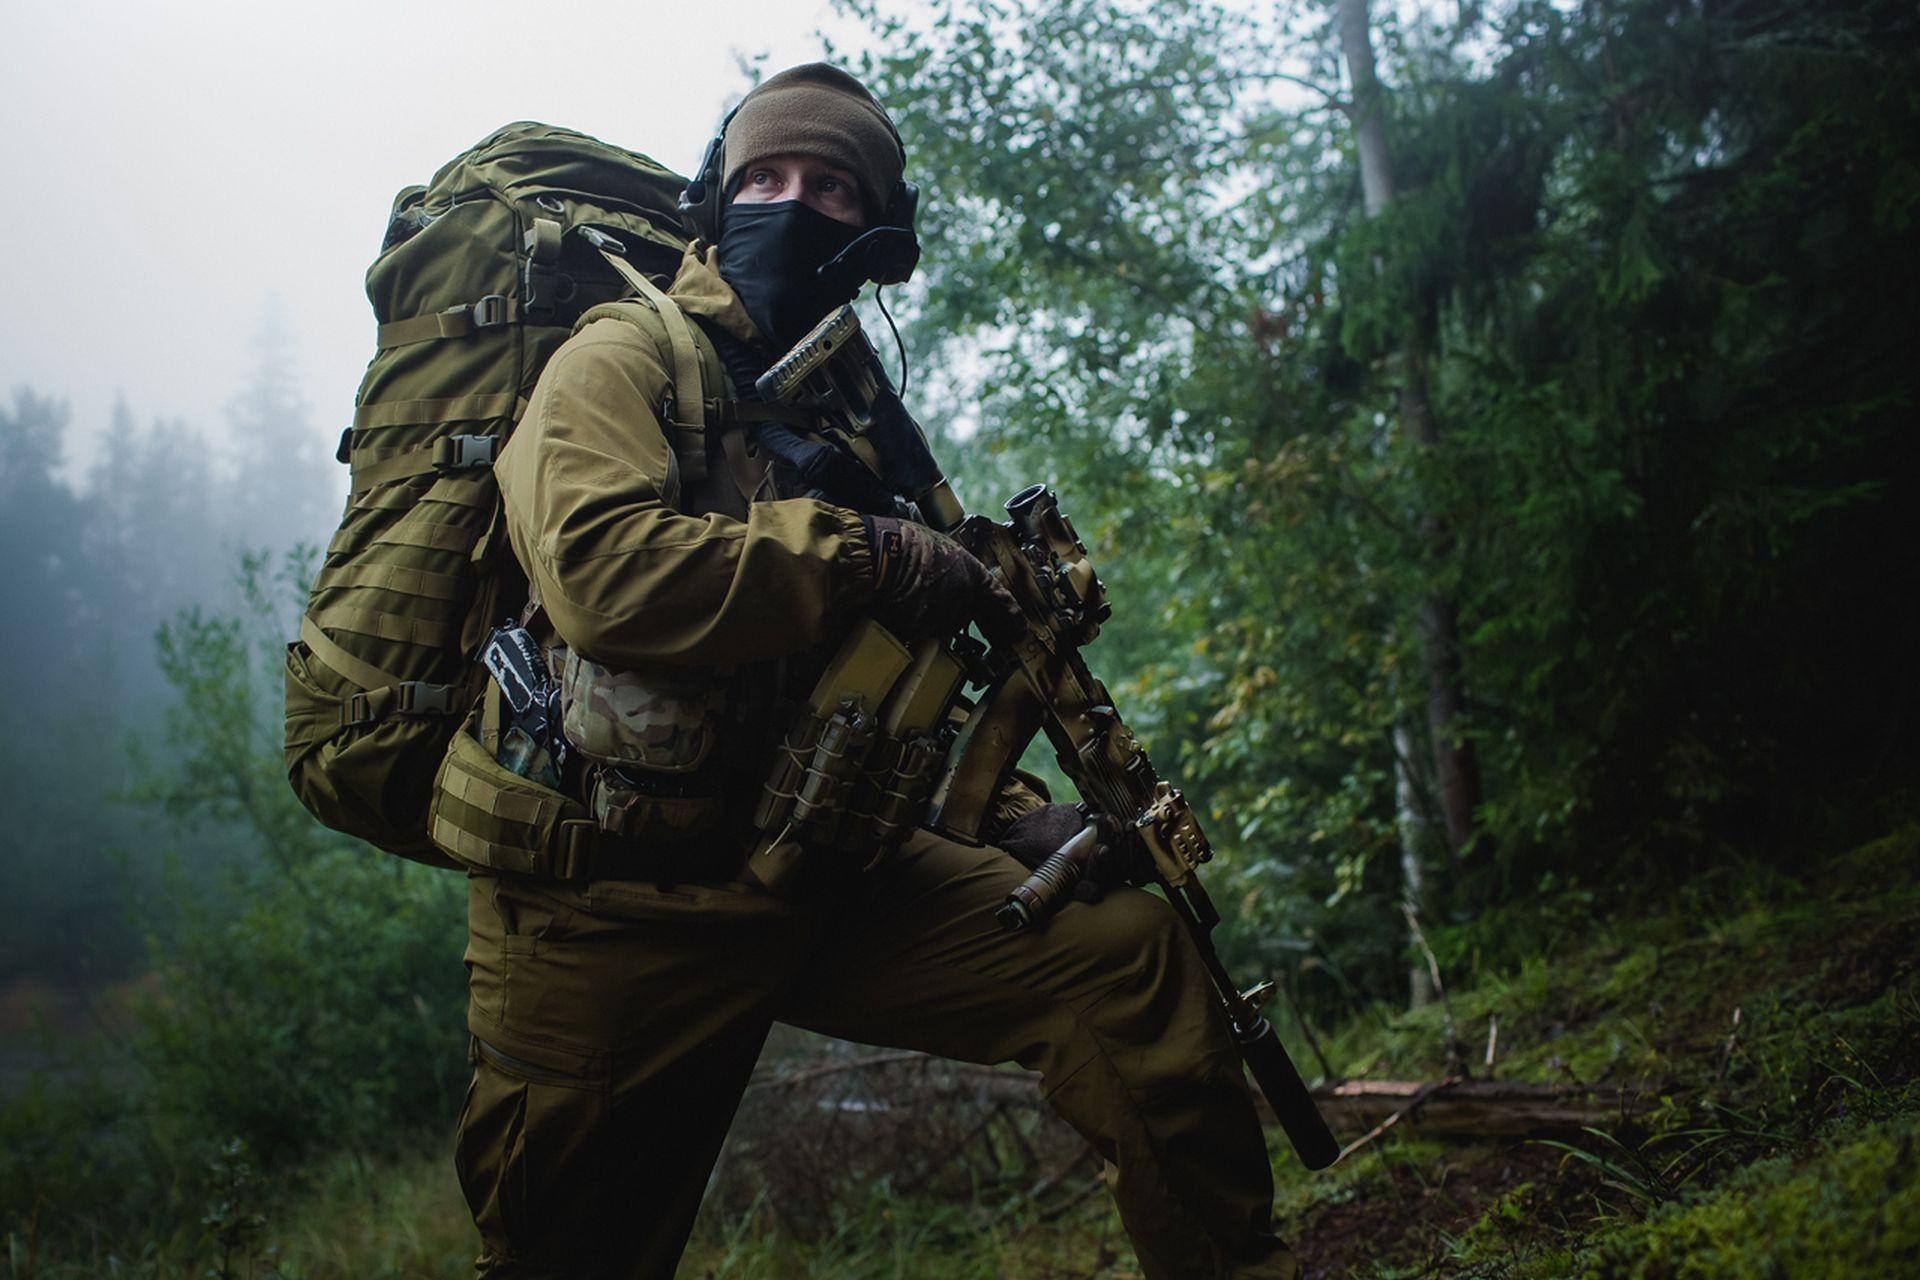 Soldiers outdoors weapons suppressor kalashnikov elcan optical